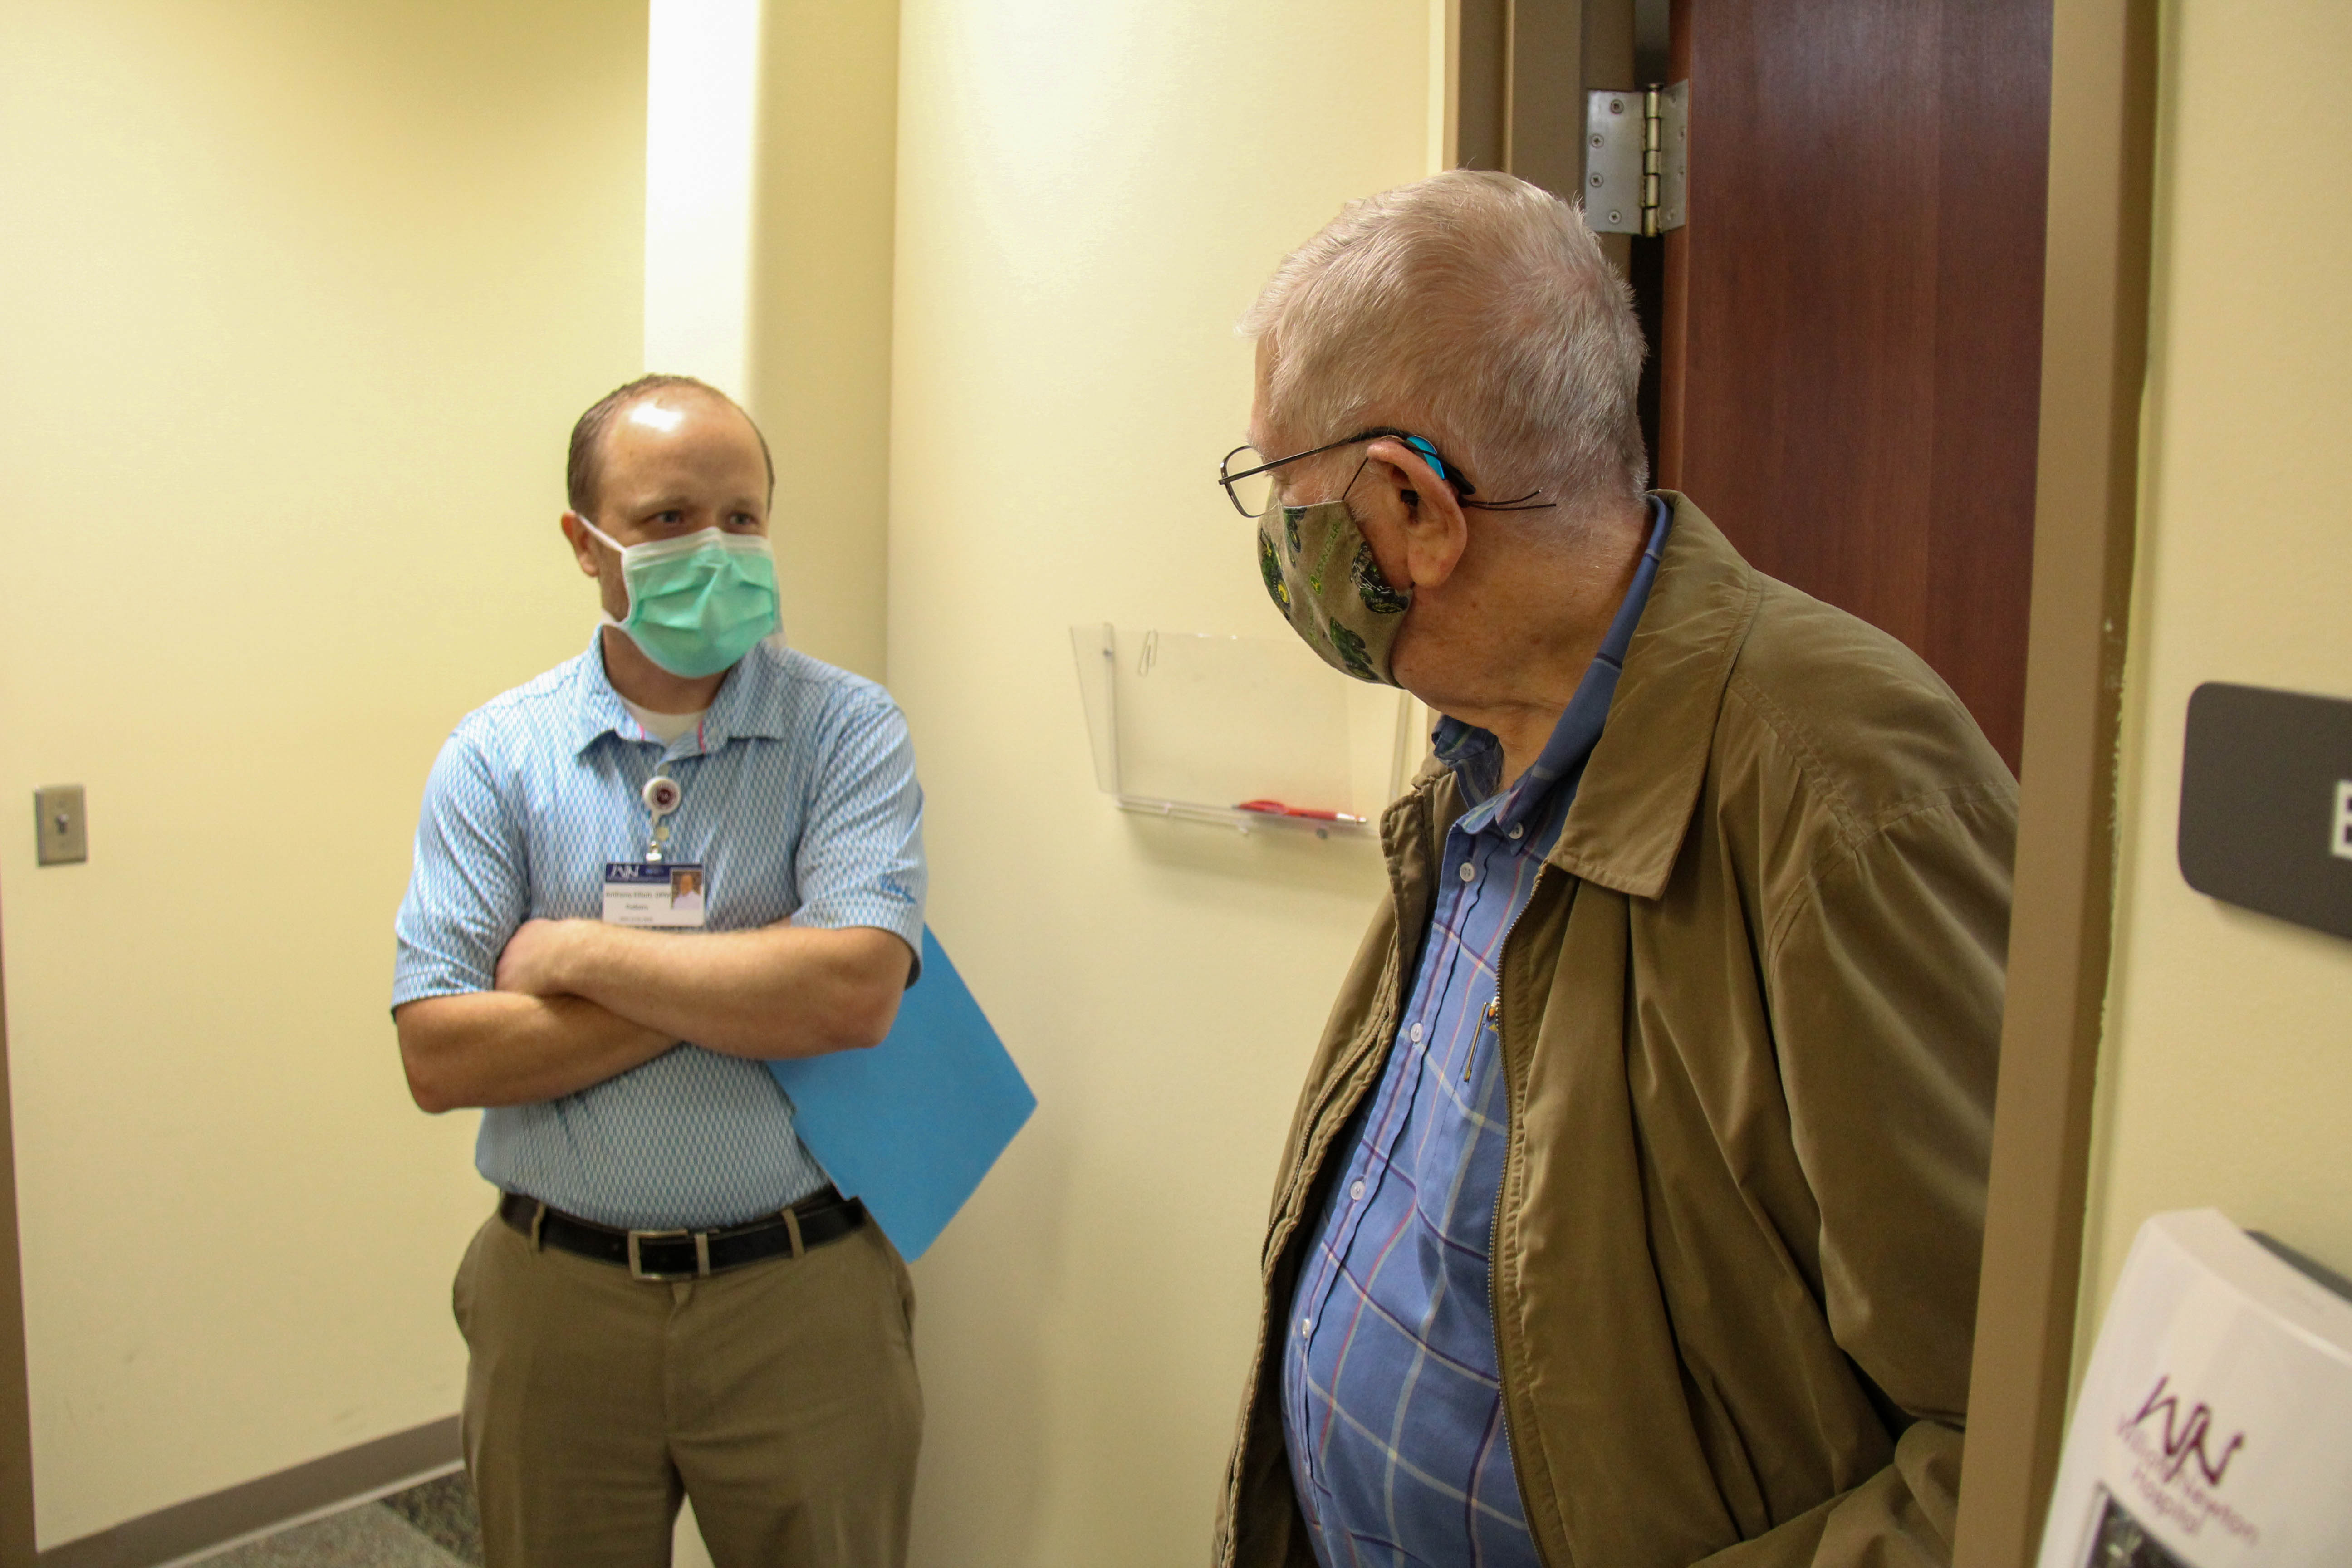 Dr. Elliot having discussion with patient